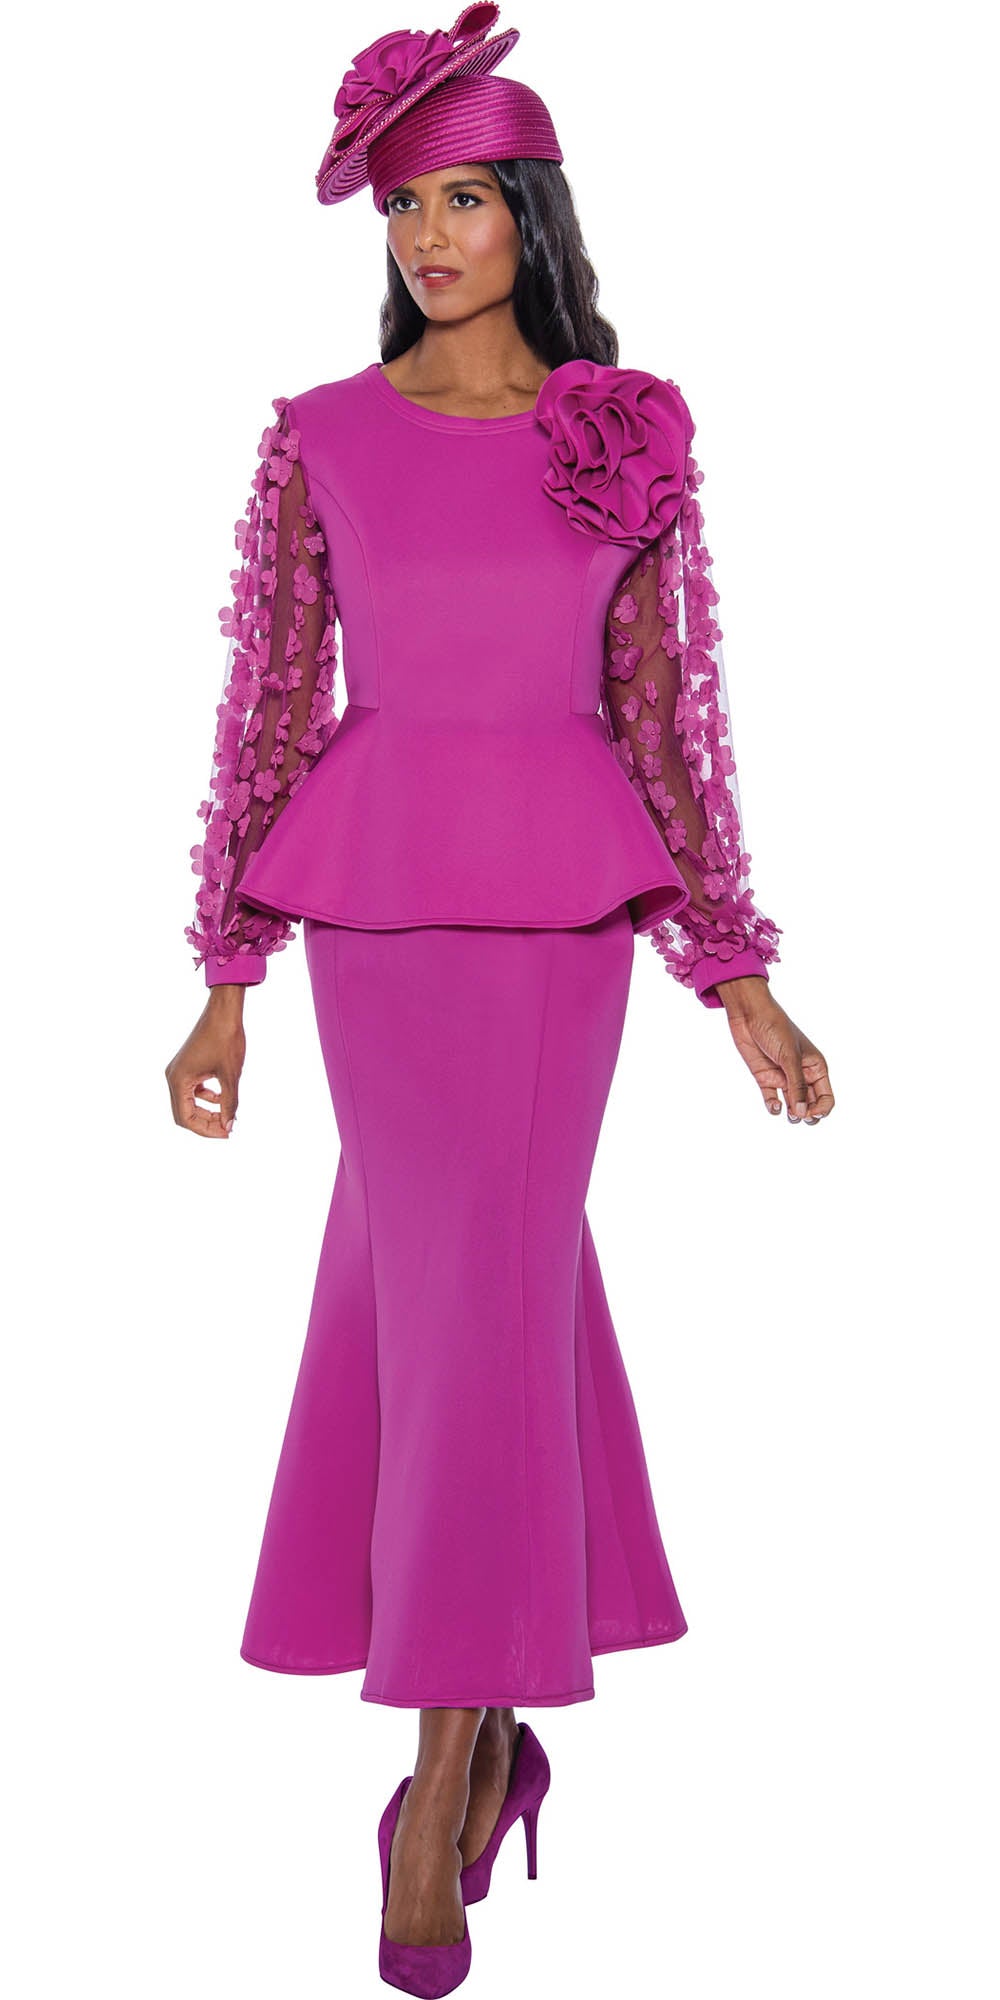 Stellar Looks - SL1552 - 2 PC Amethyst Purple Scuba Skirt Suit With Mesh Petal Sleeves